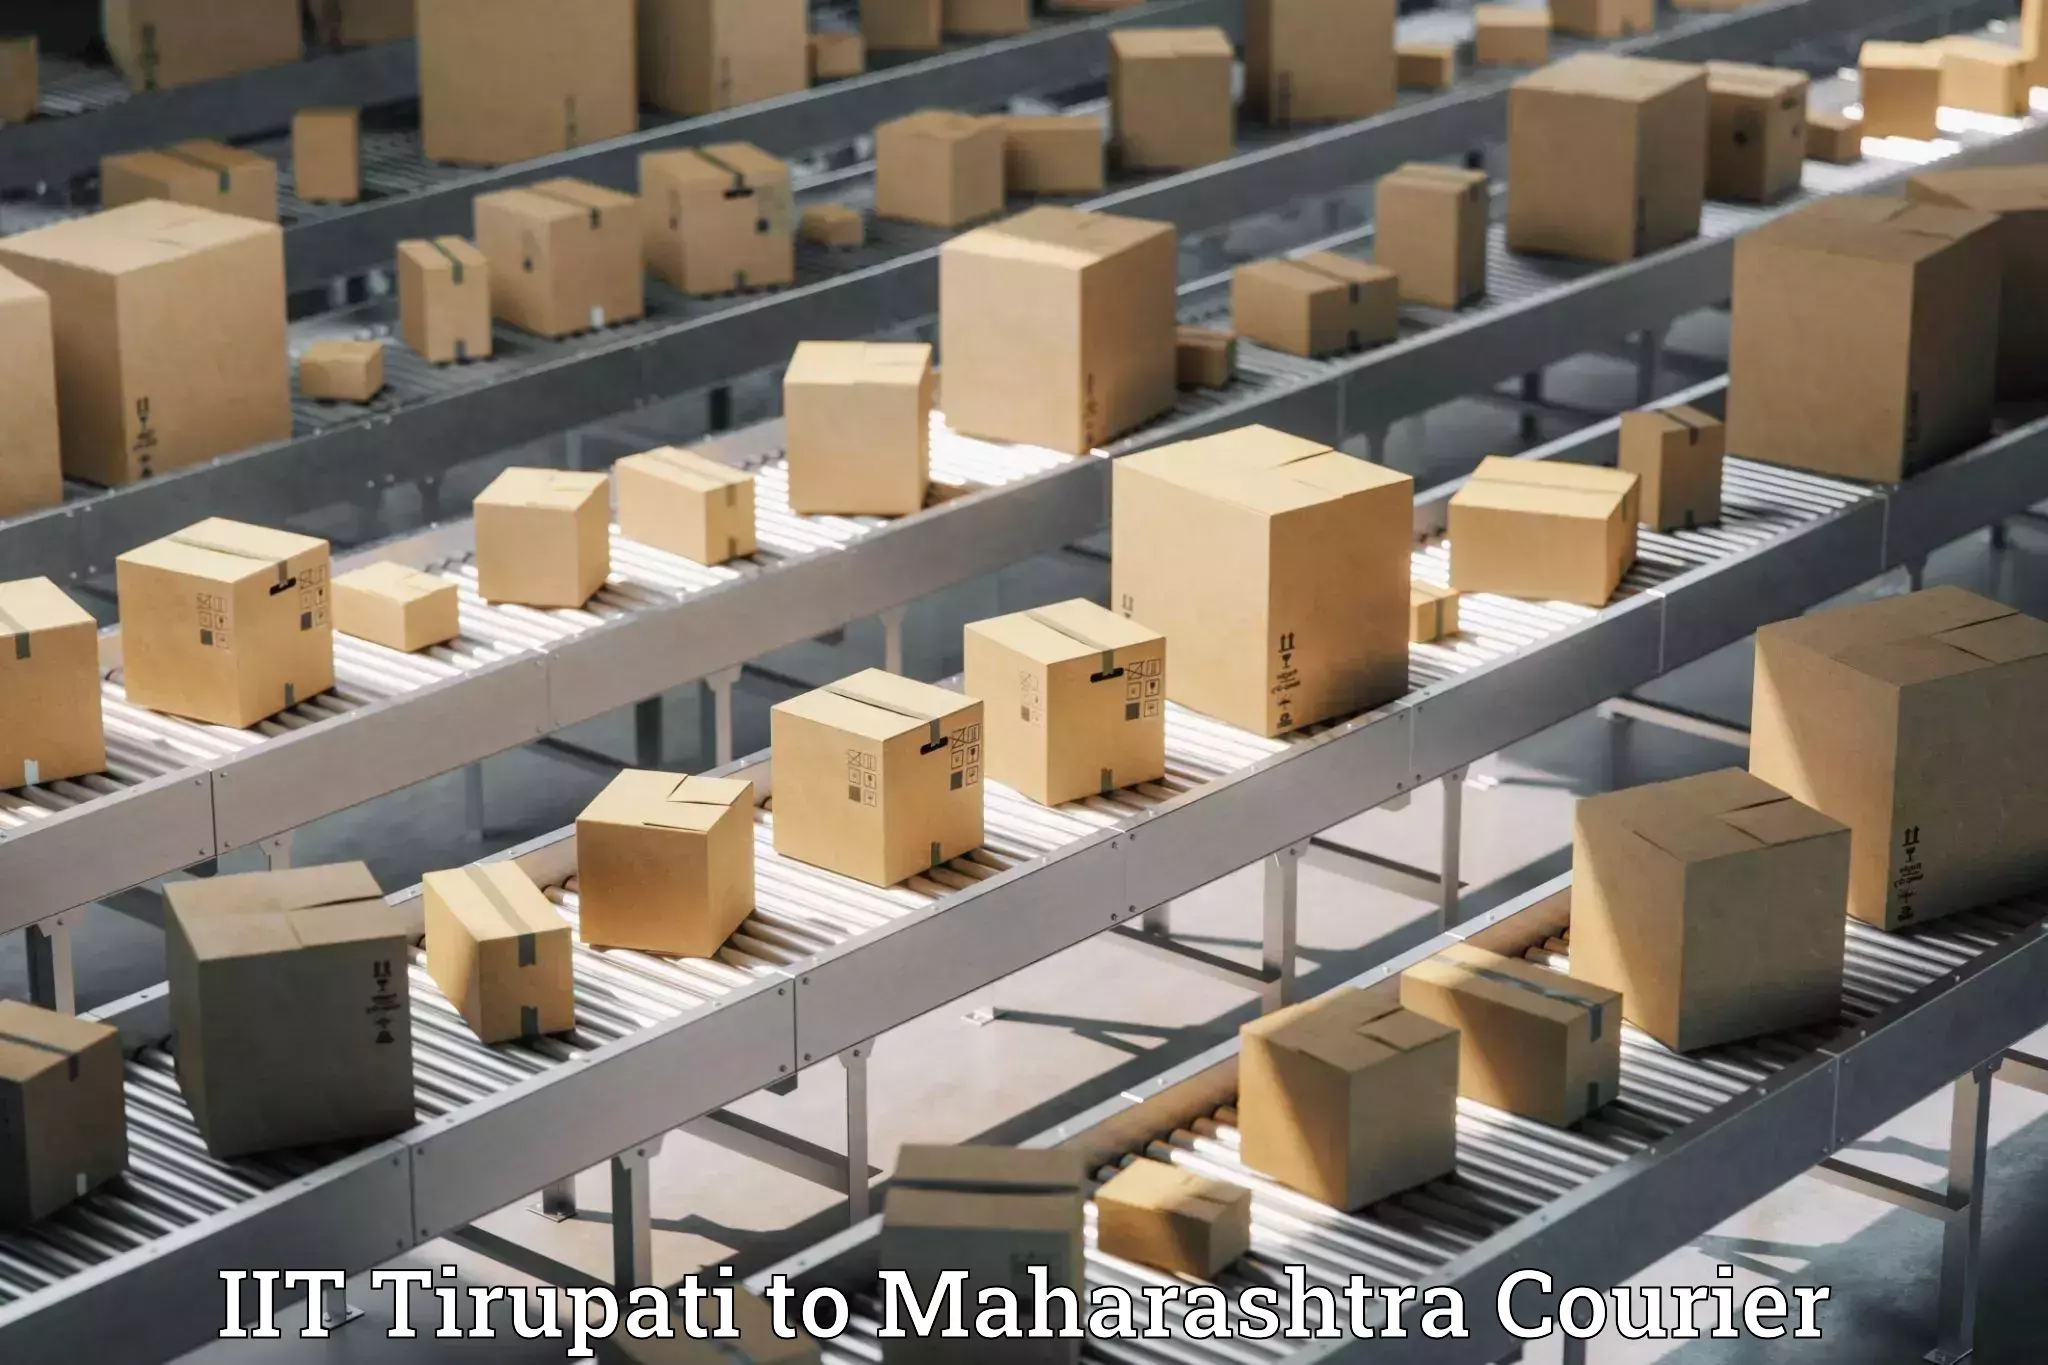 Express courier capabilities IIT Tirupati to IIT Mumbai